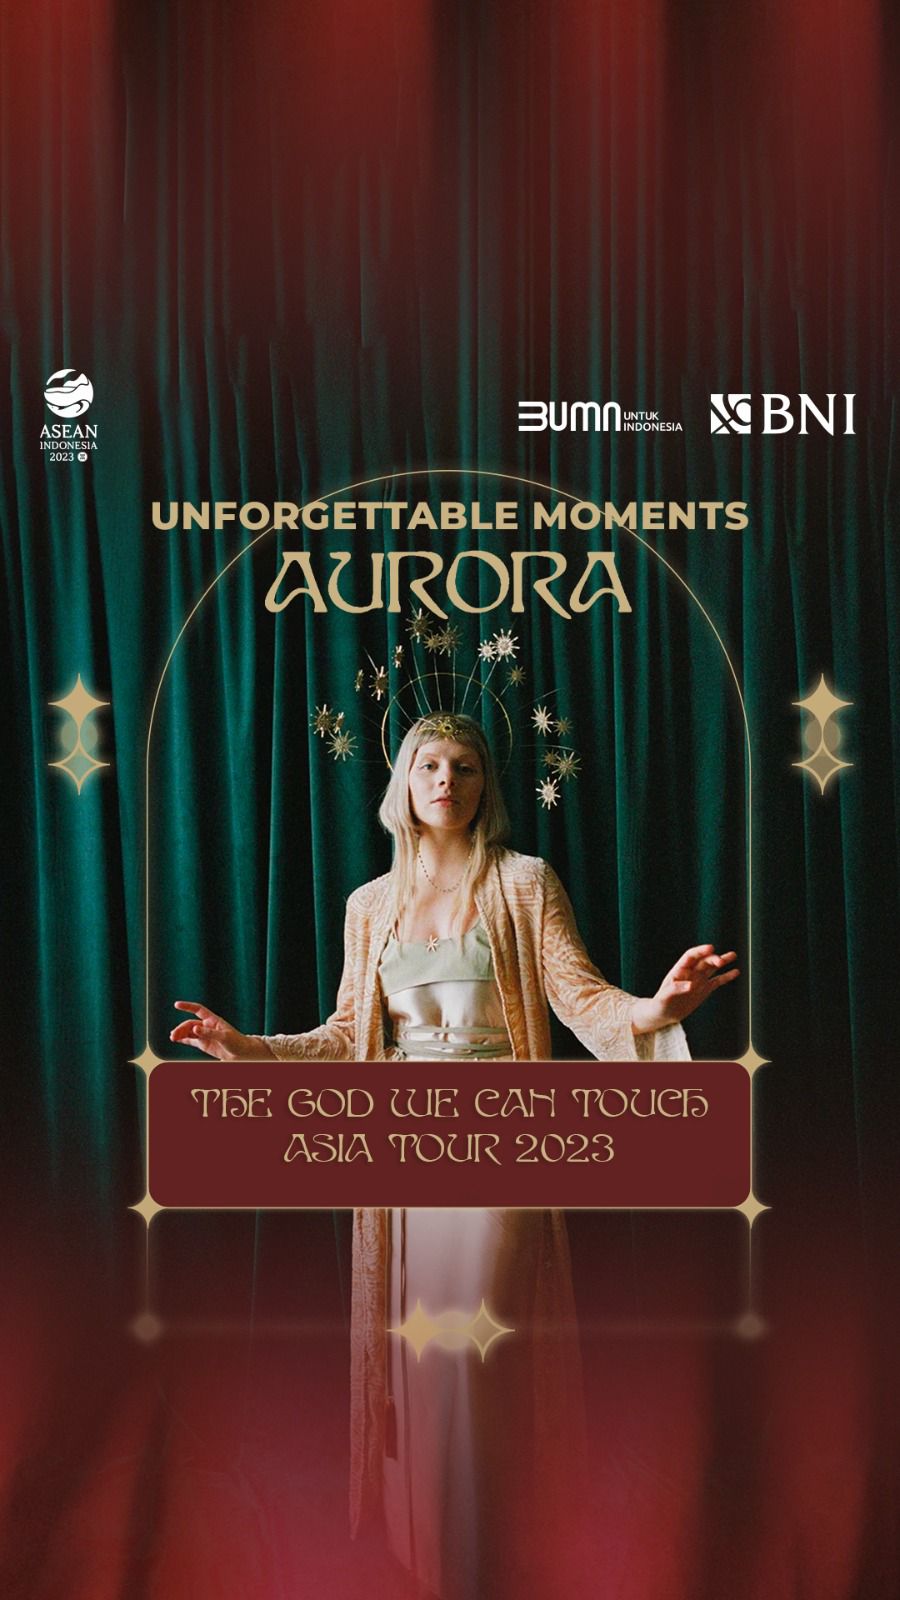 Attracting Millennial Customers, BNI Sponsors Aurora Concert